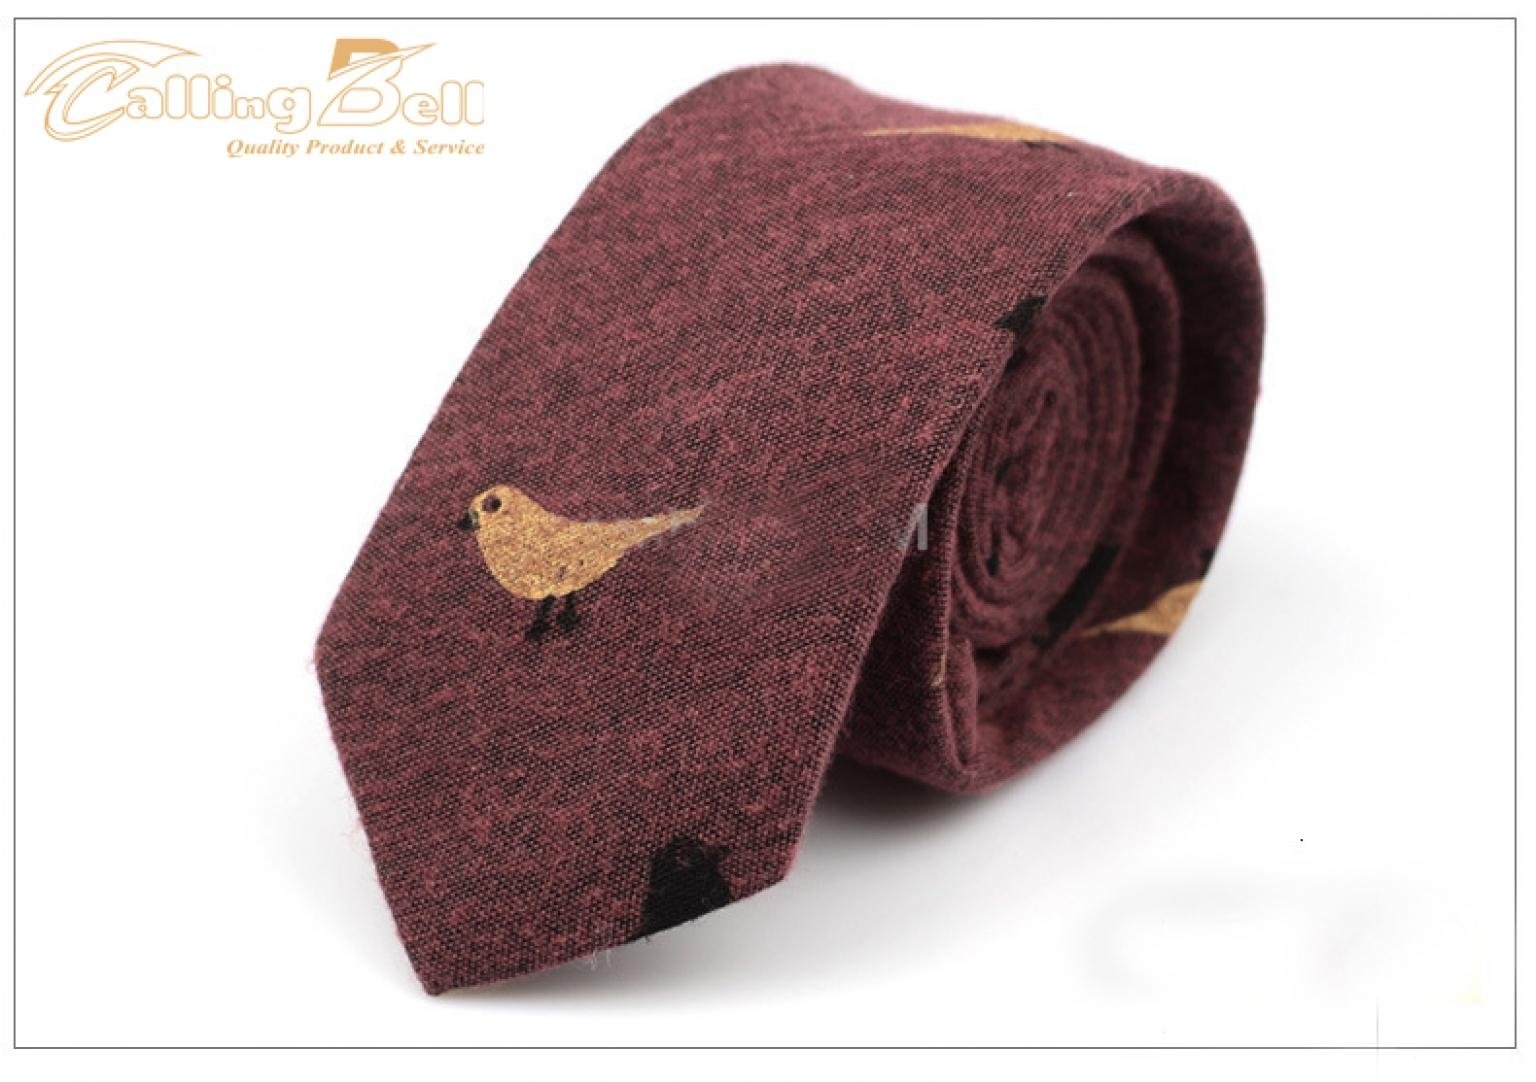 Fashion Ties for Men Cotton Narrow Tie Skinny Cravat Neckties for Winter Men Party Skinny Tie Casual Printed Neck Ties Neckwear